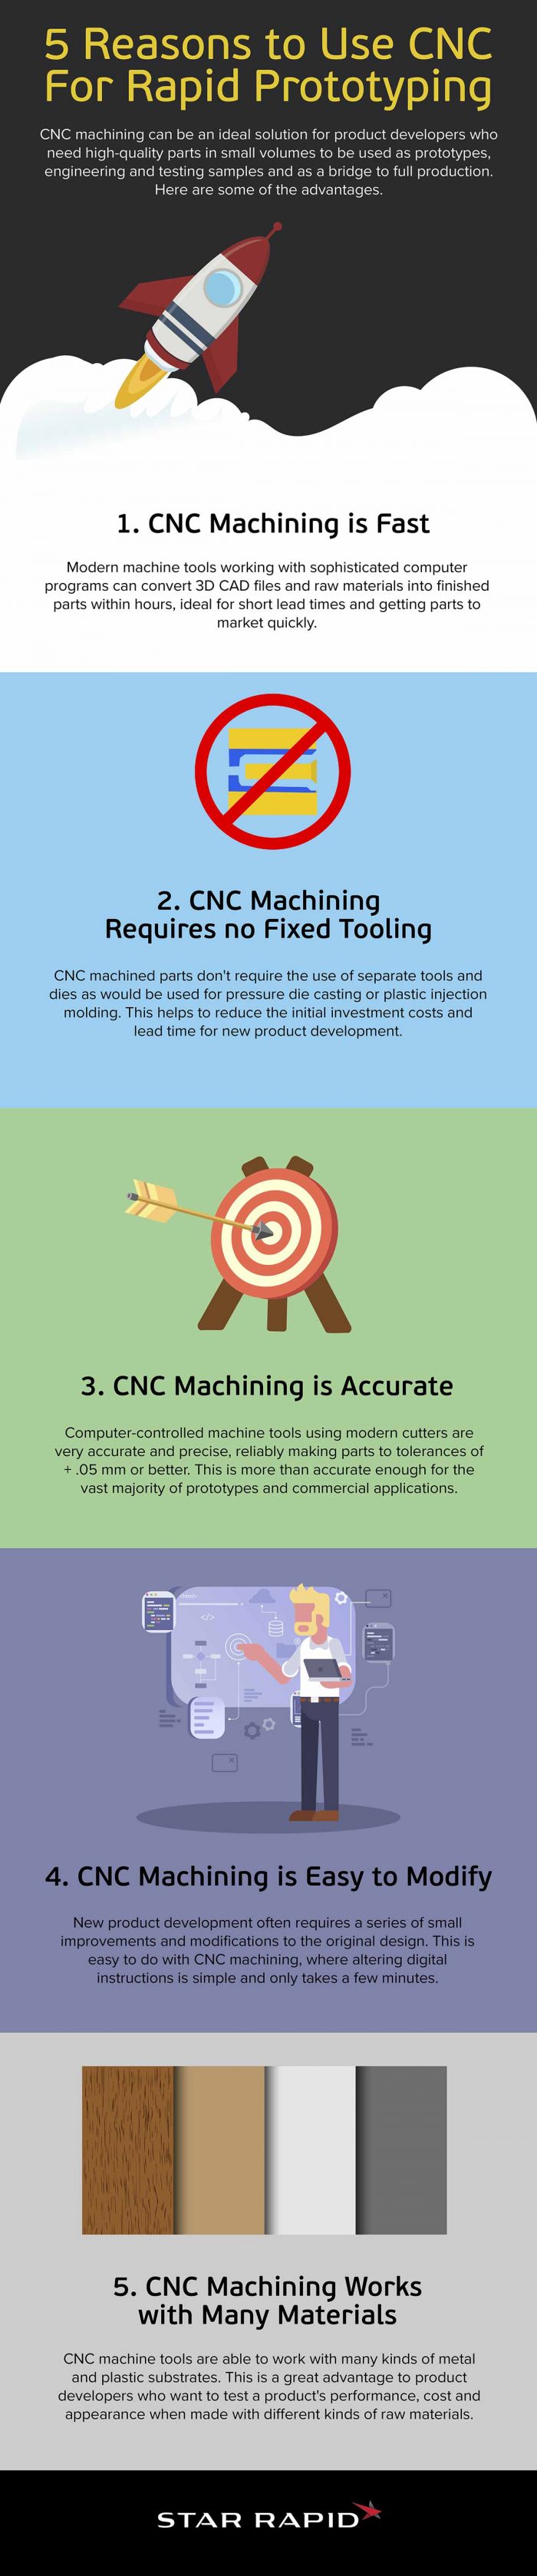 CNC Infographic